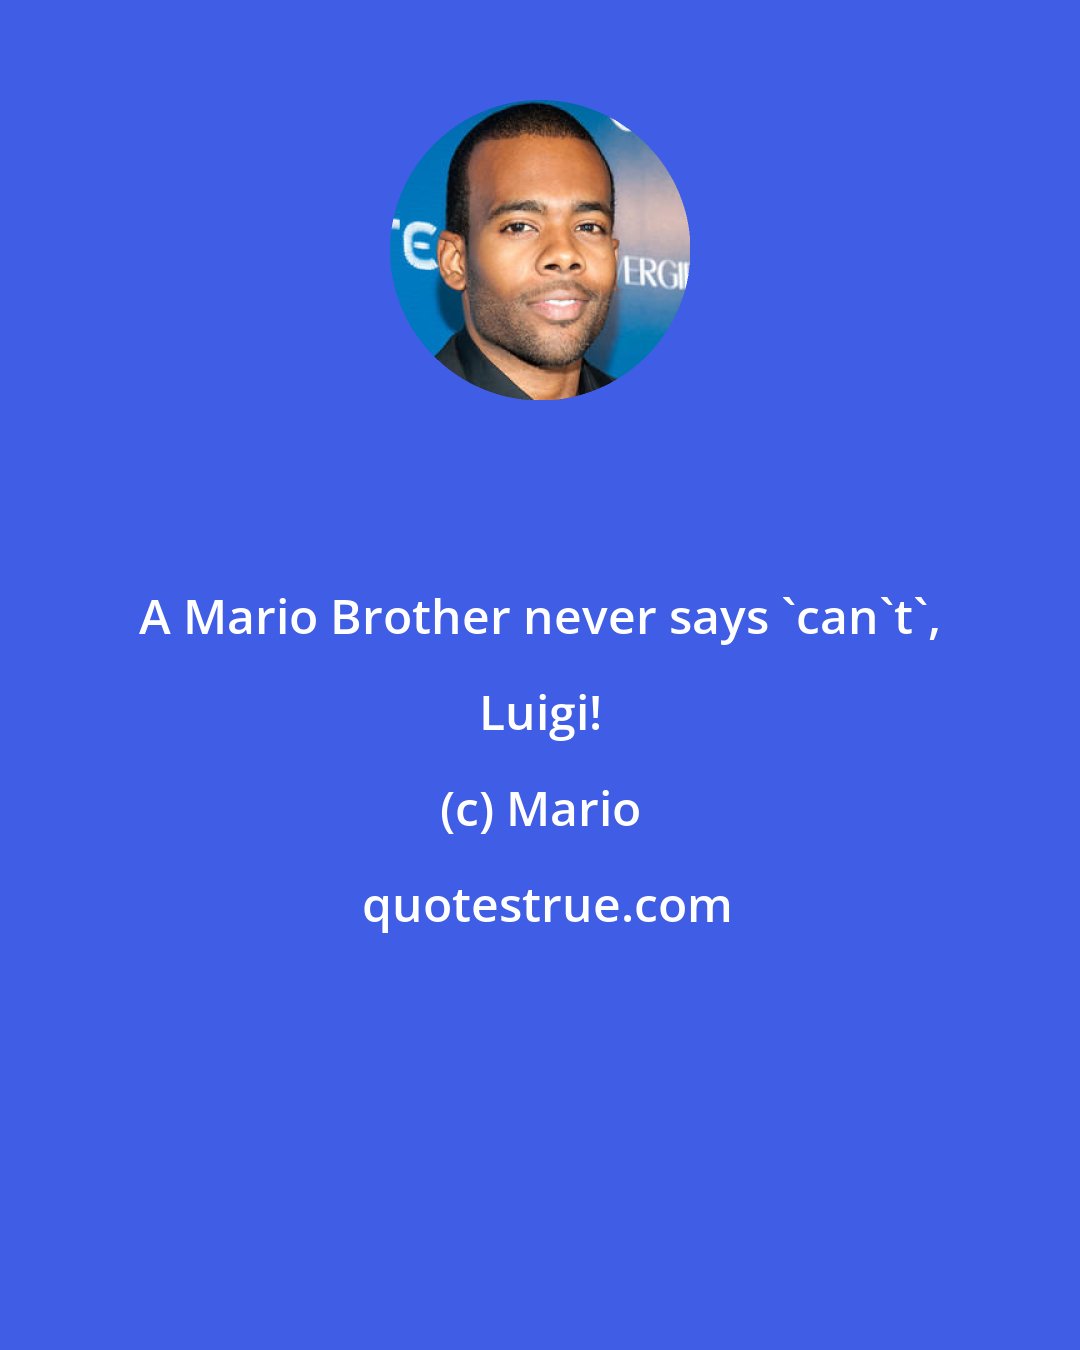 Mario: A Mario Brother never says 'can't', Luigi!